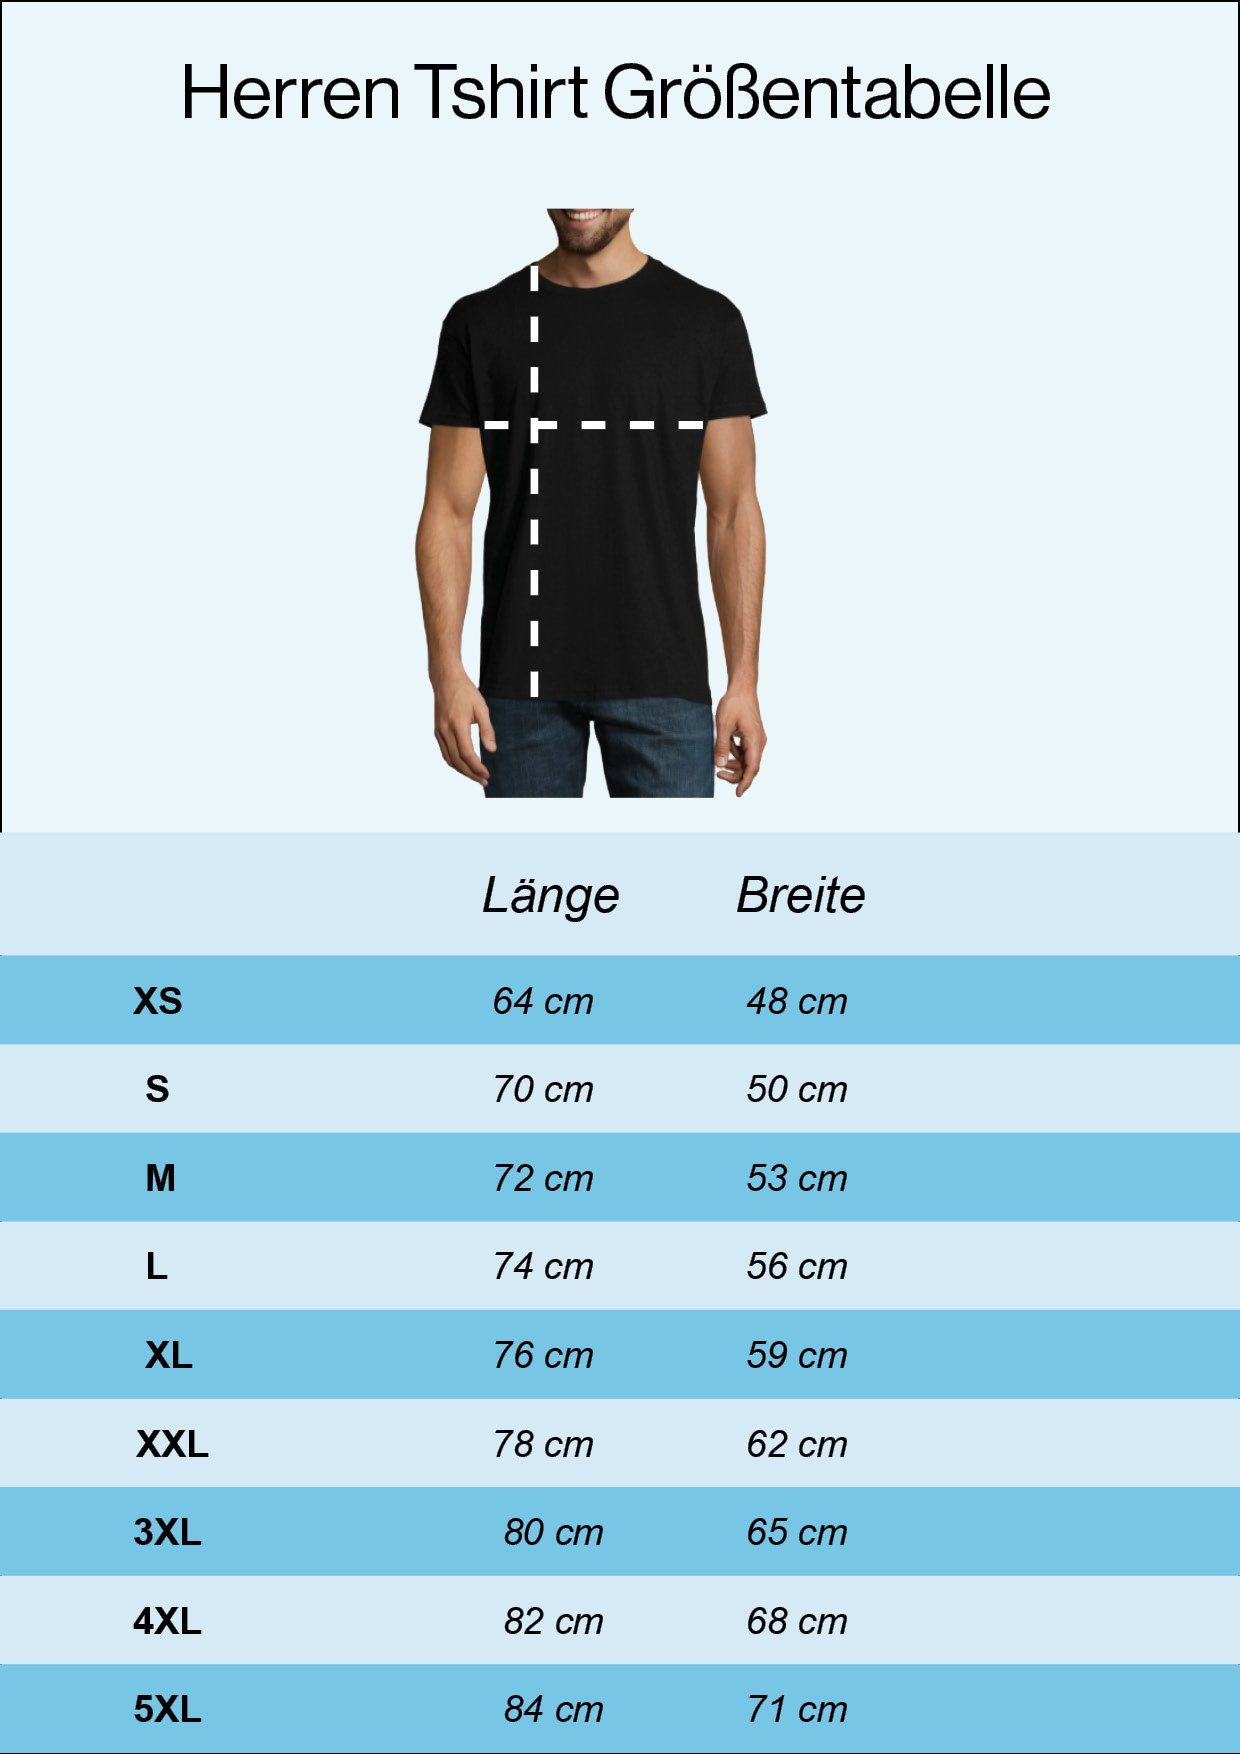 Youth Designz T-Shirt Piraten Papa trendigem Herren Grau mit Frontprint Shirt Papirat